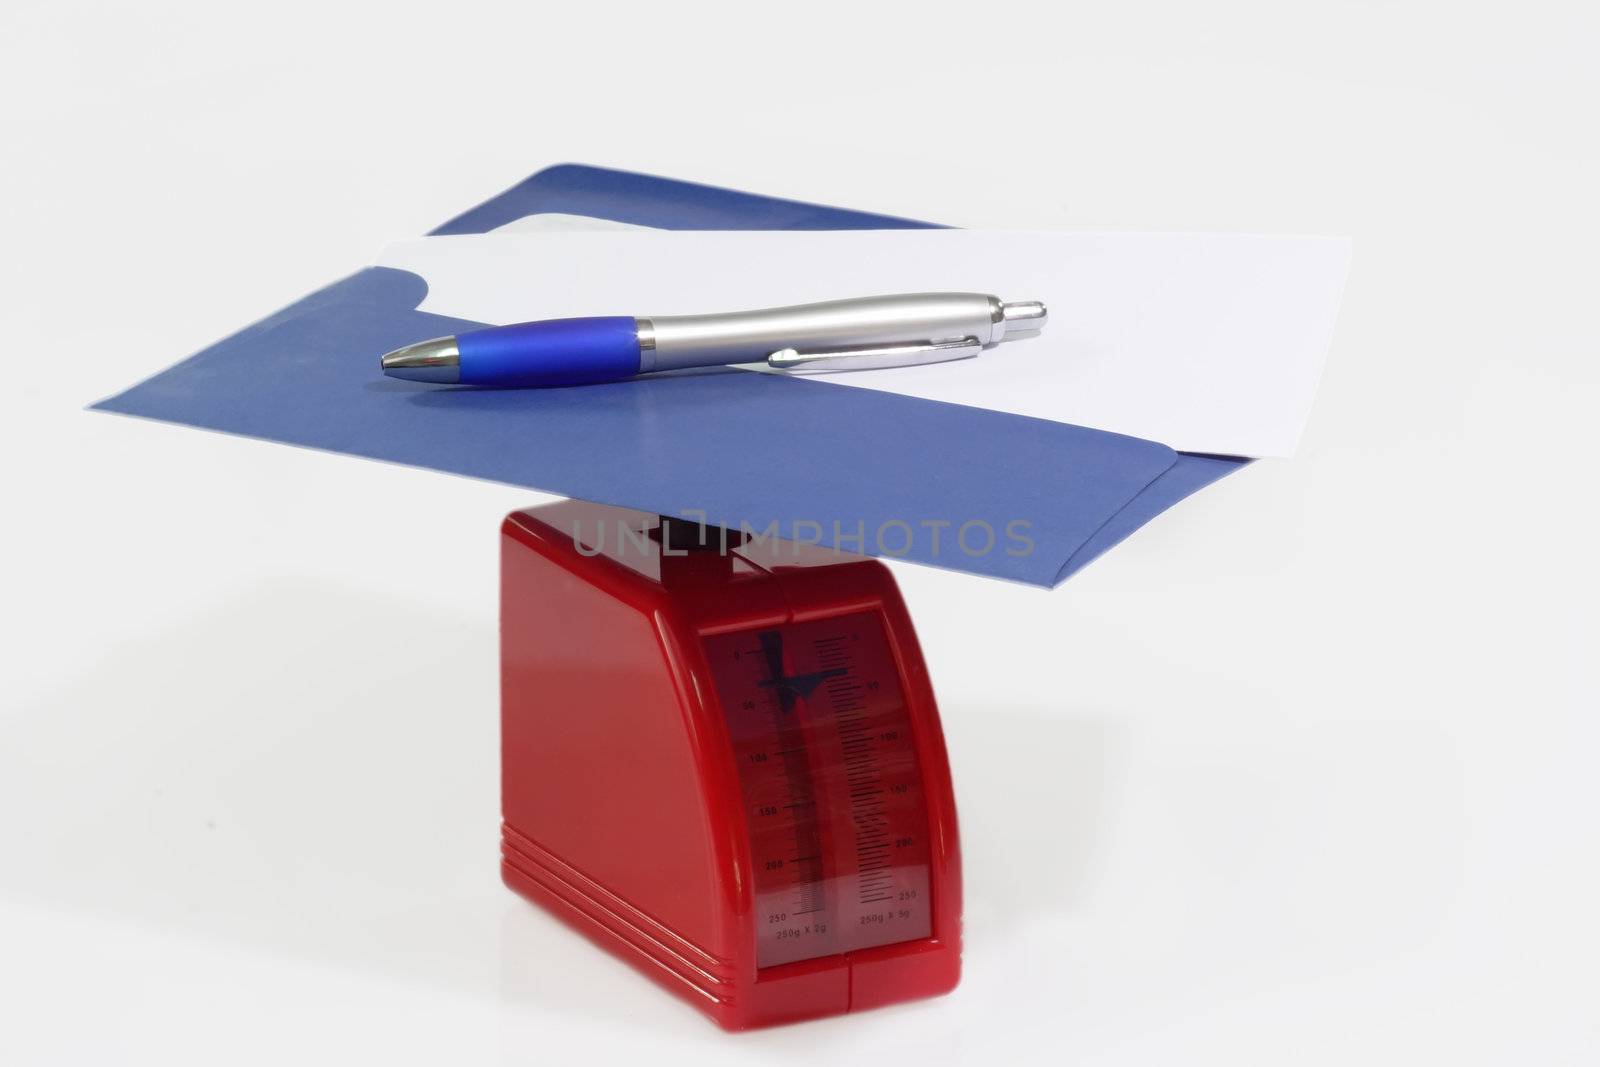 Letter in blue envelope on red letter scale